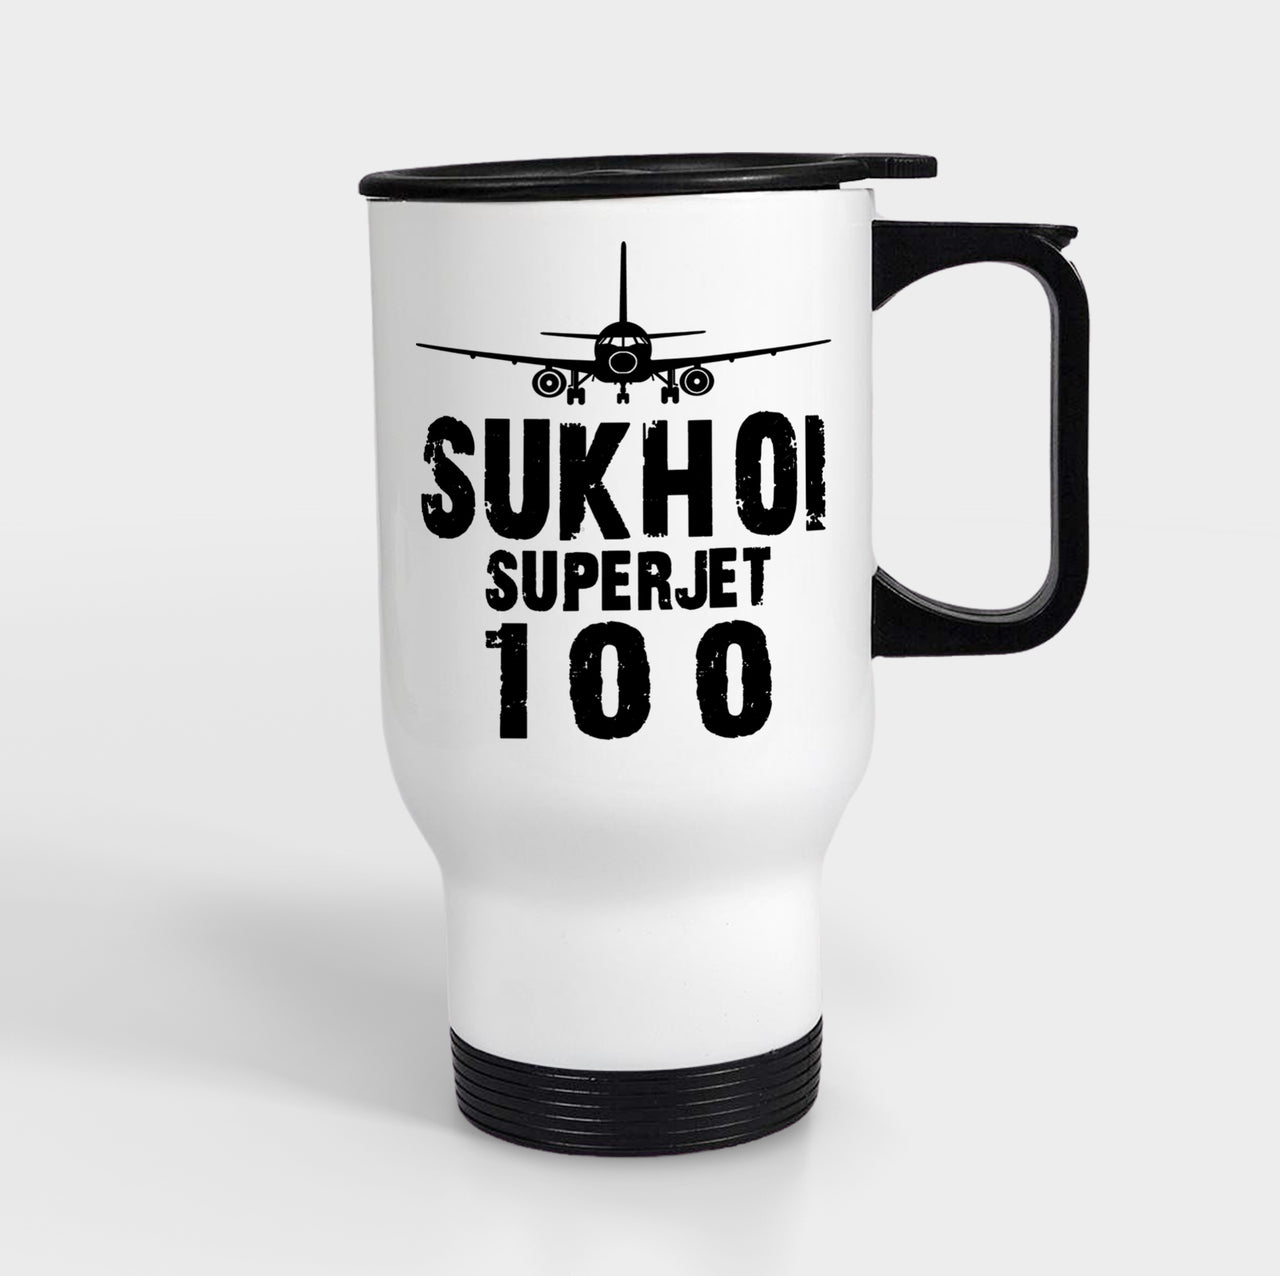 Sukhoi Superjet 100 & Plane Designed Travel Mugs (With Holder)